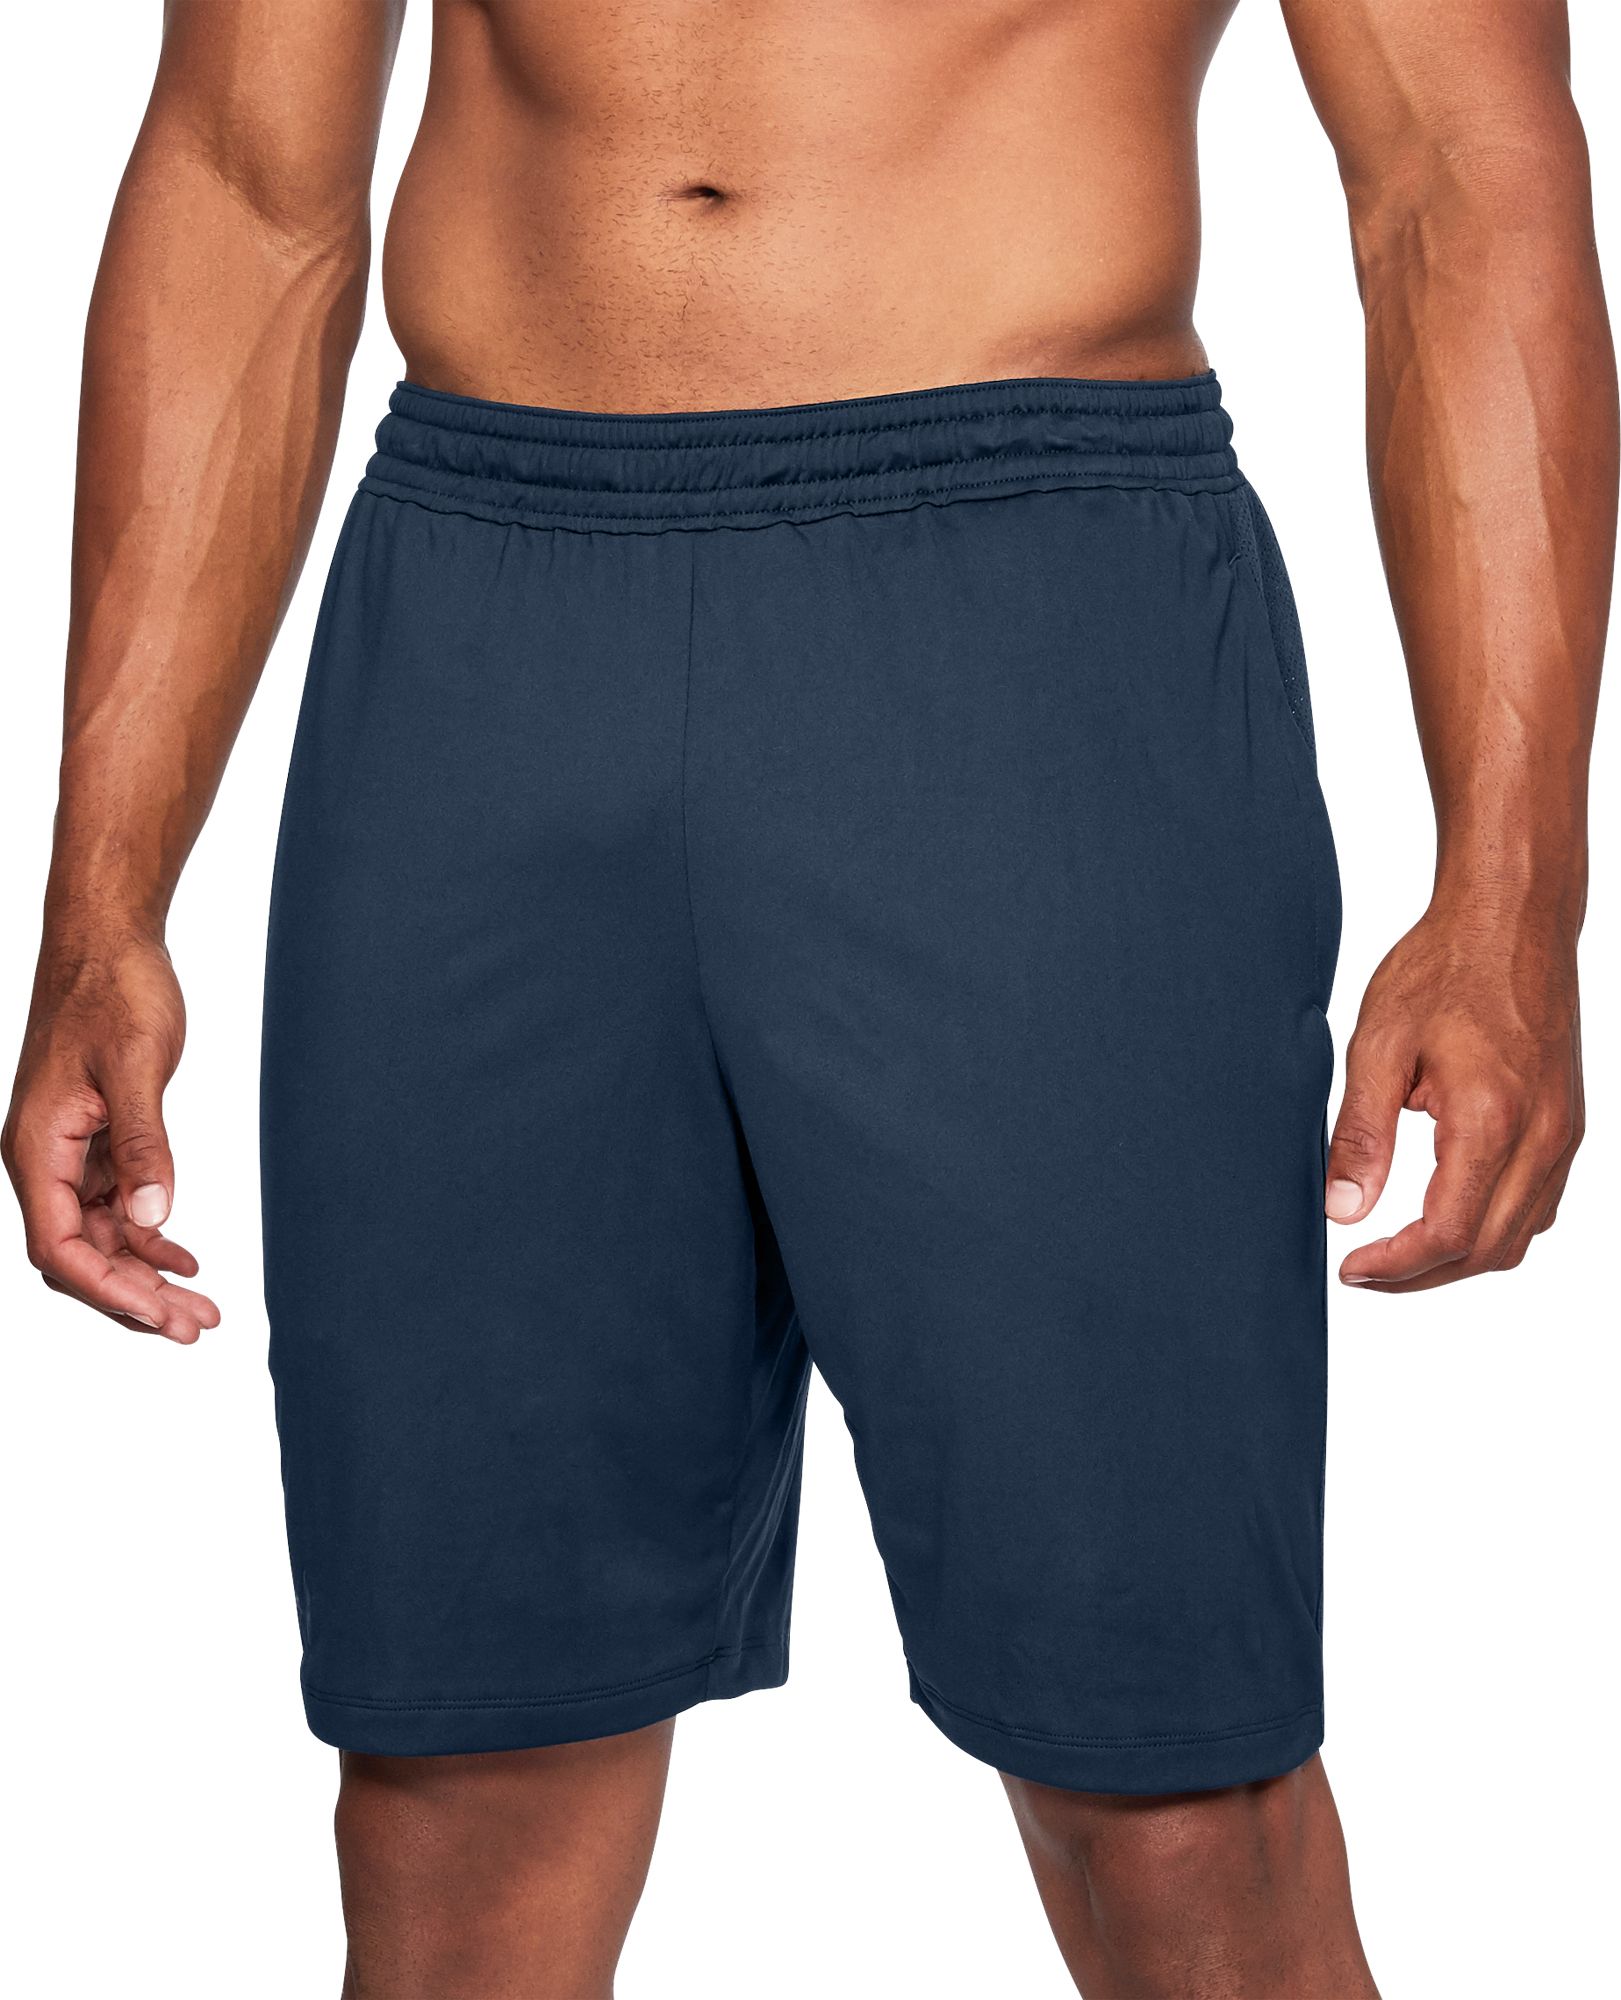 Under Armour Men's MK-1 Shorts (Regular 